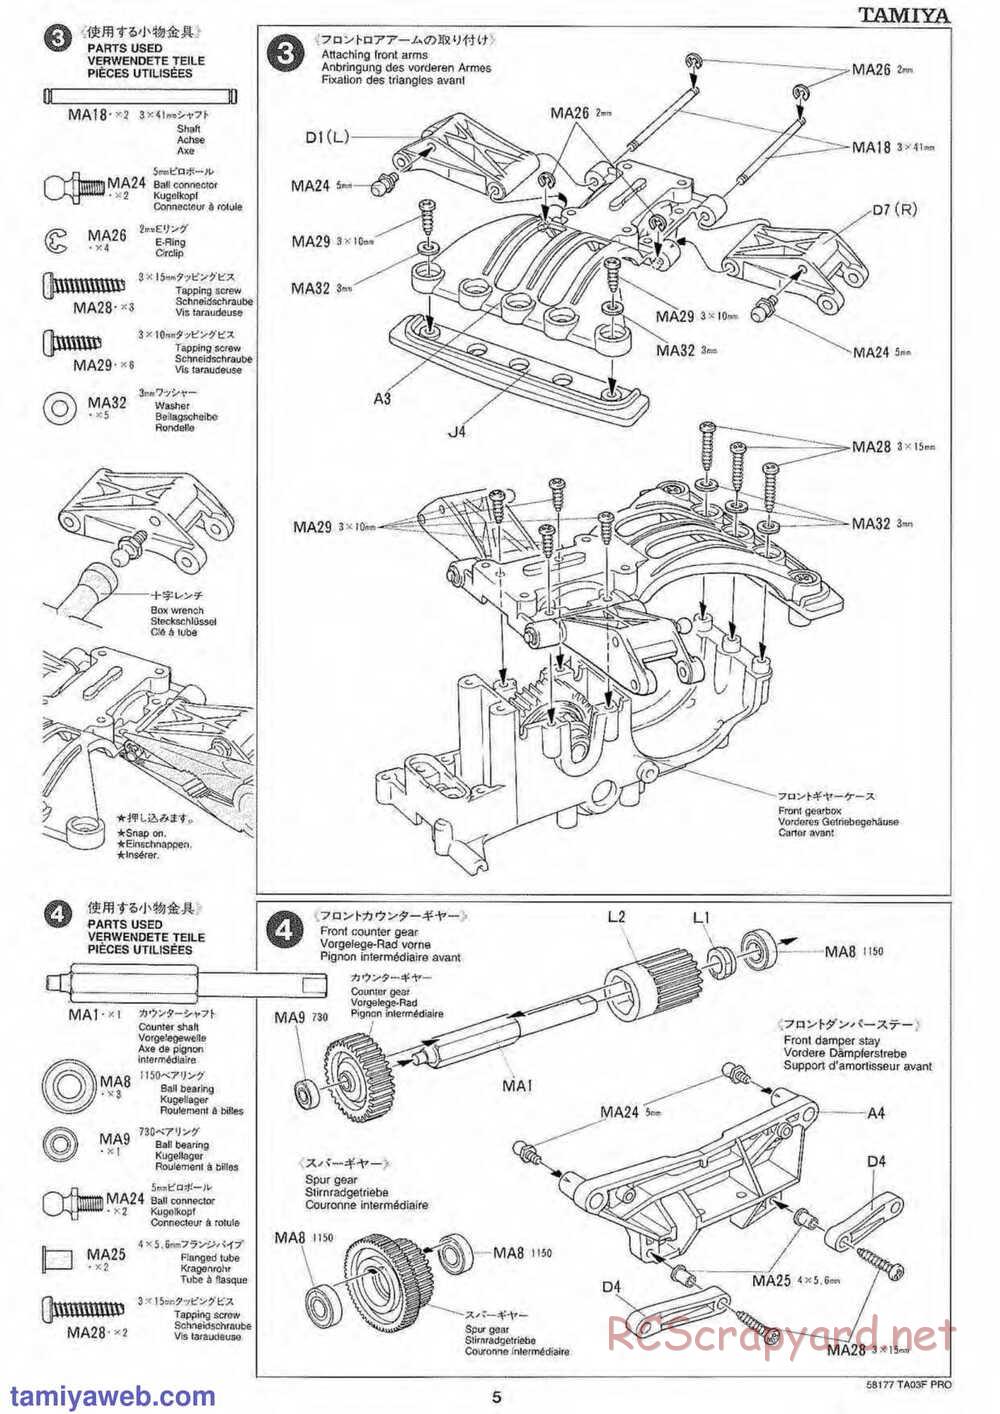 Tamiya - TA-03F Pro Chassis - Manual - Page 5